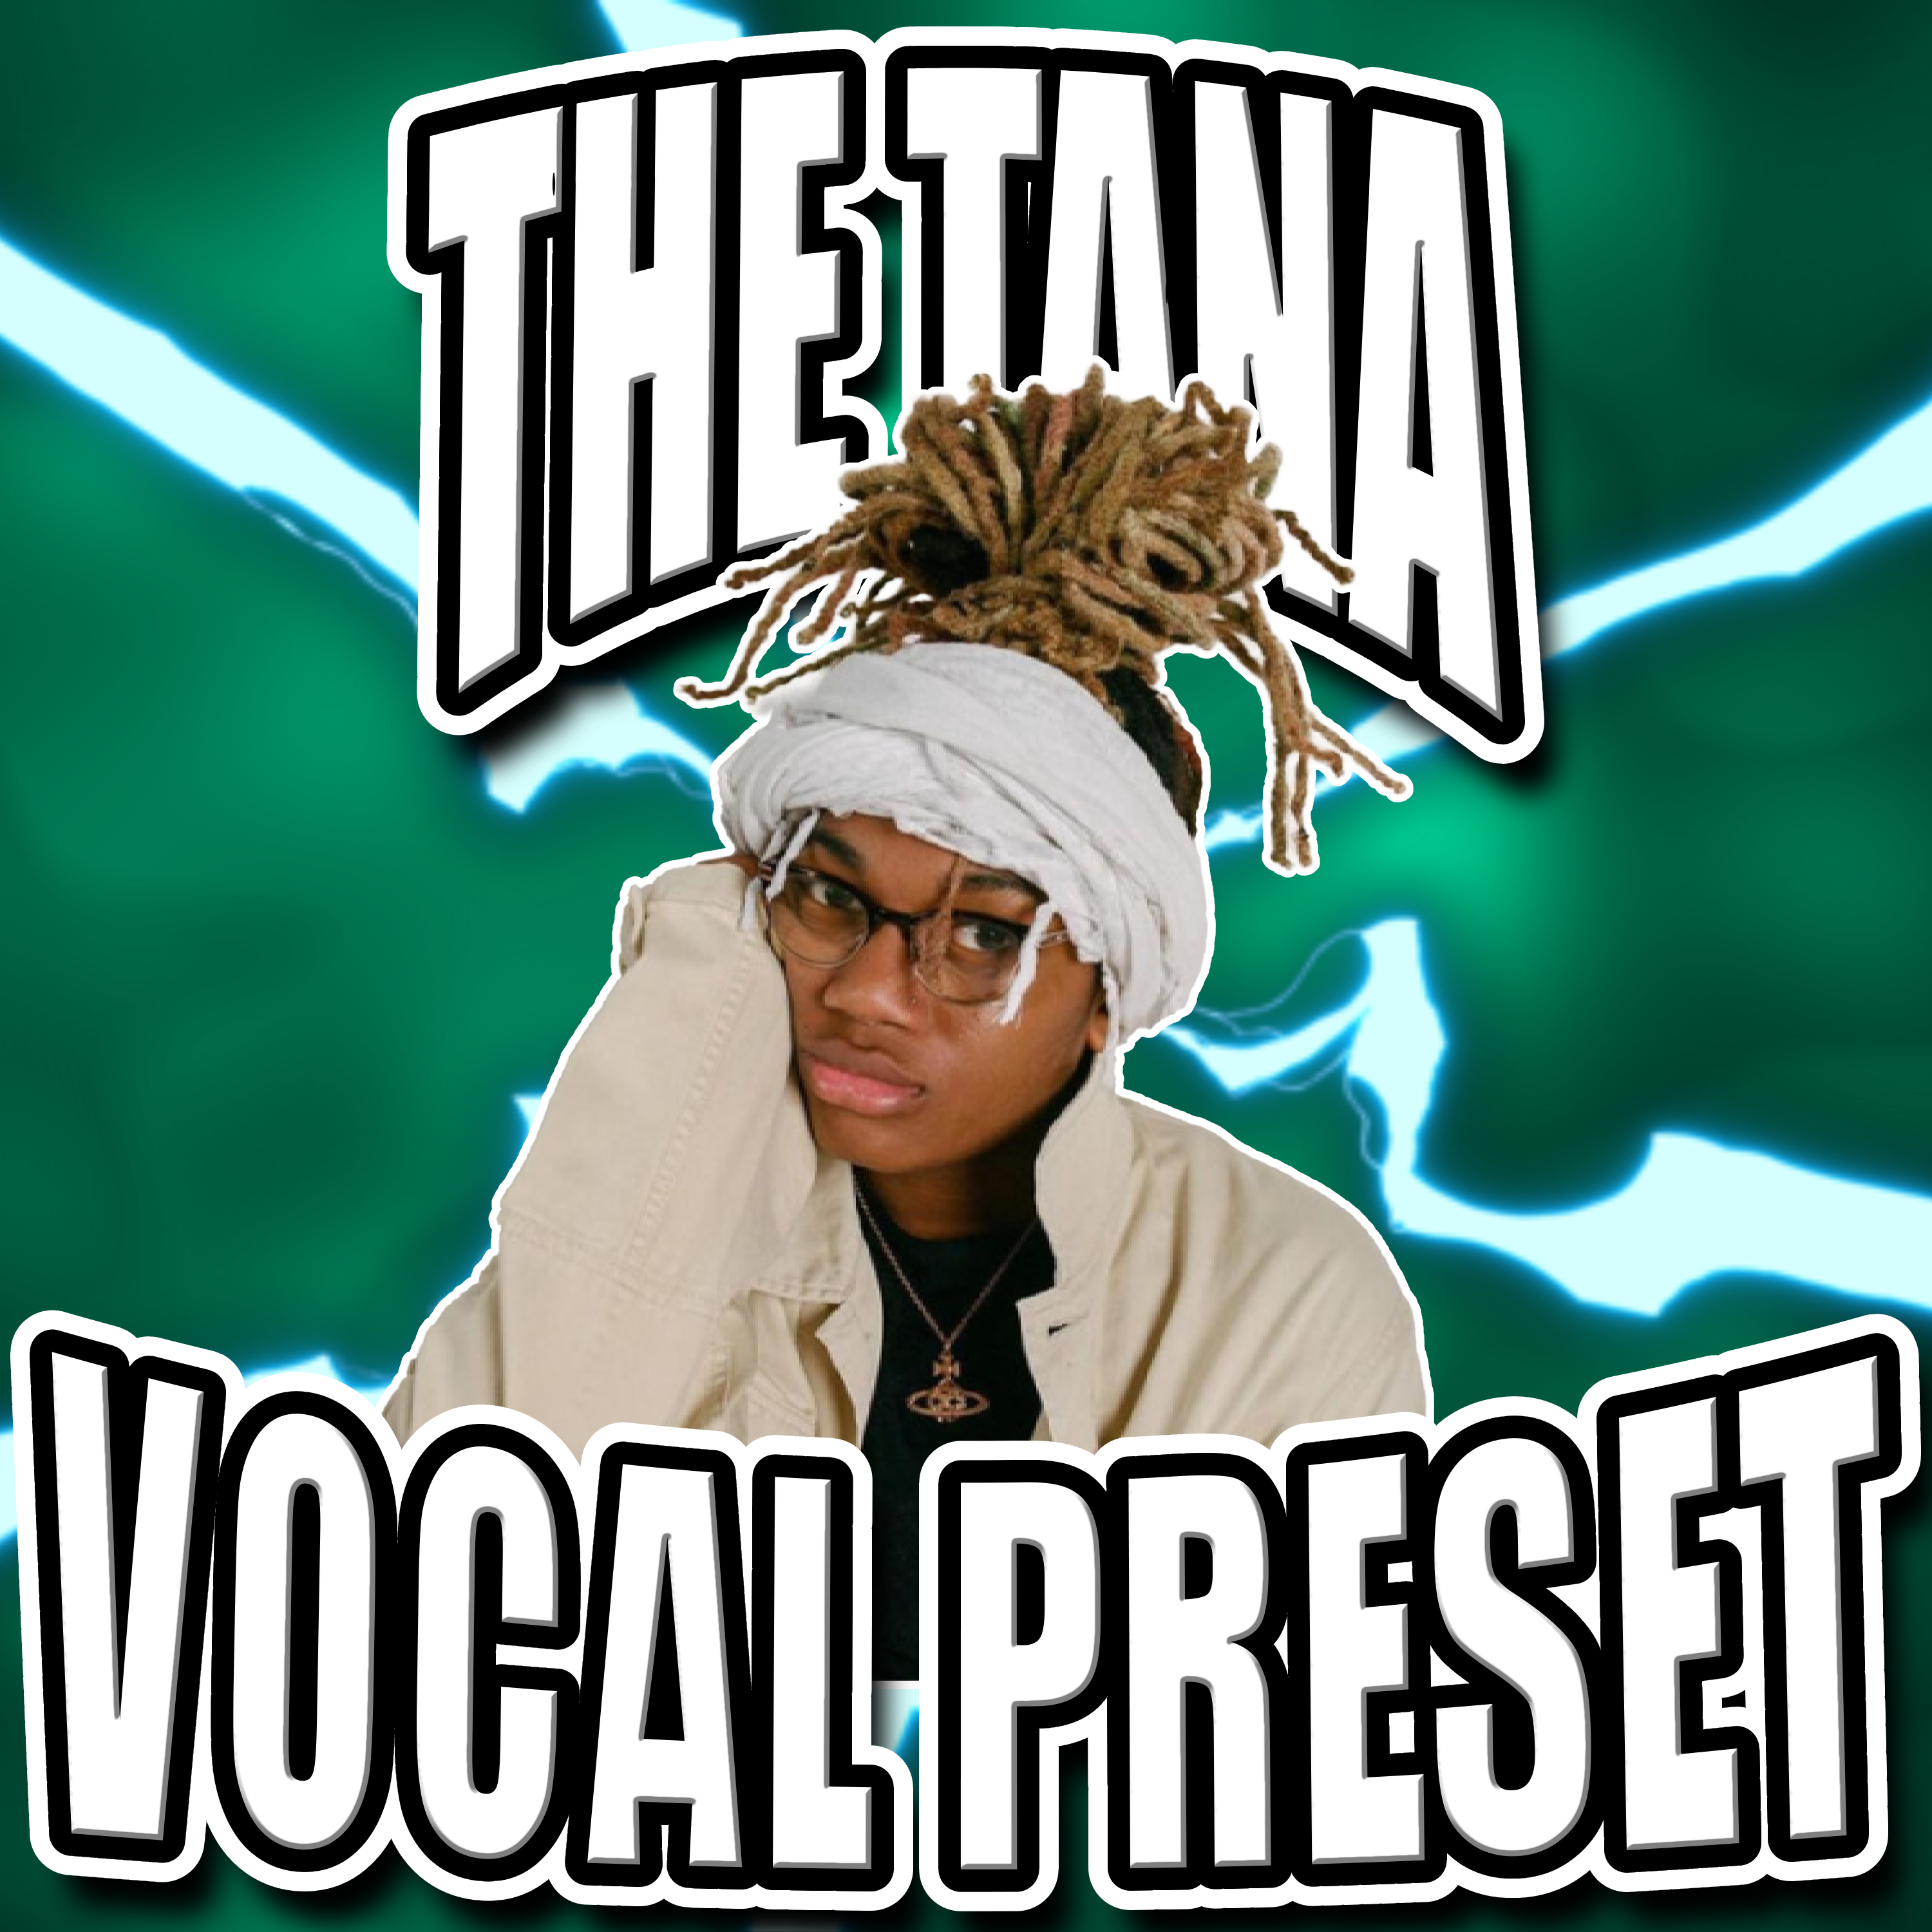 Tana Vocal Preset